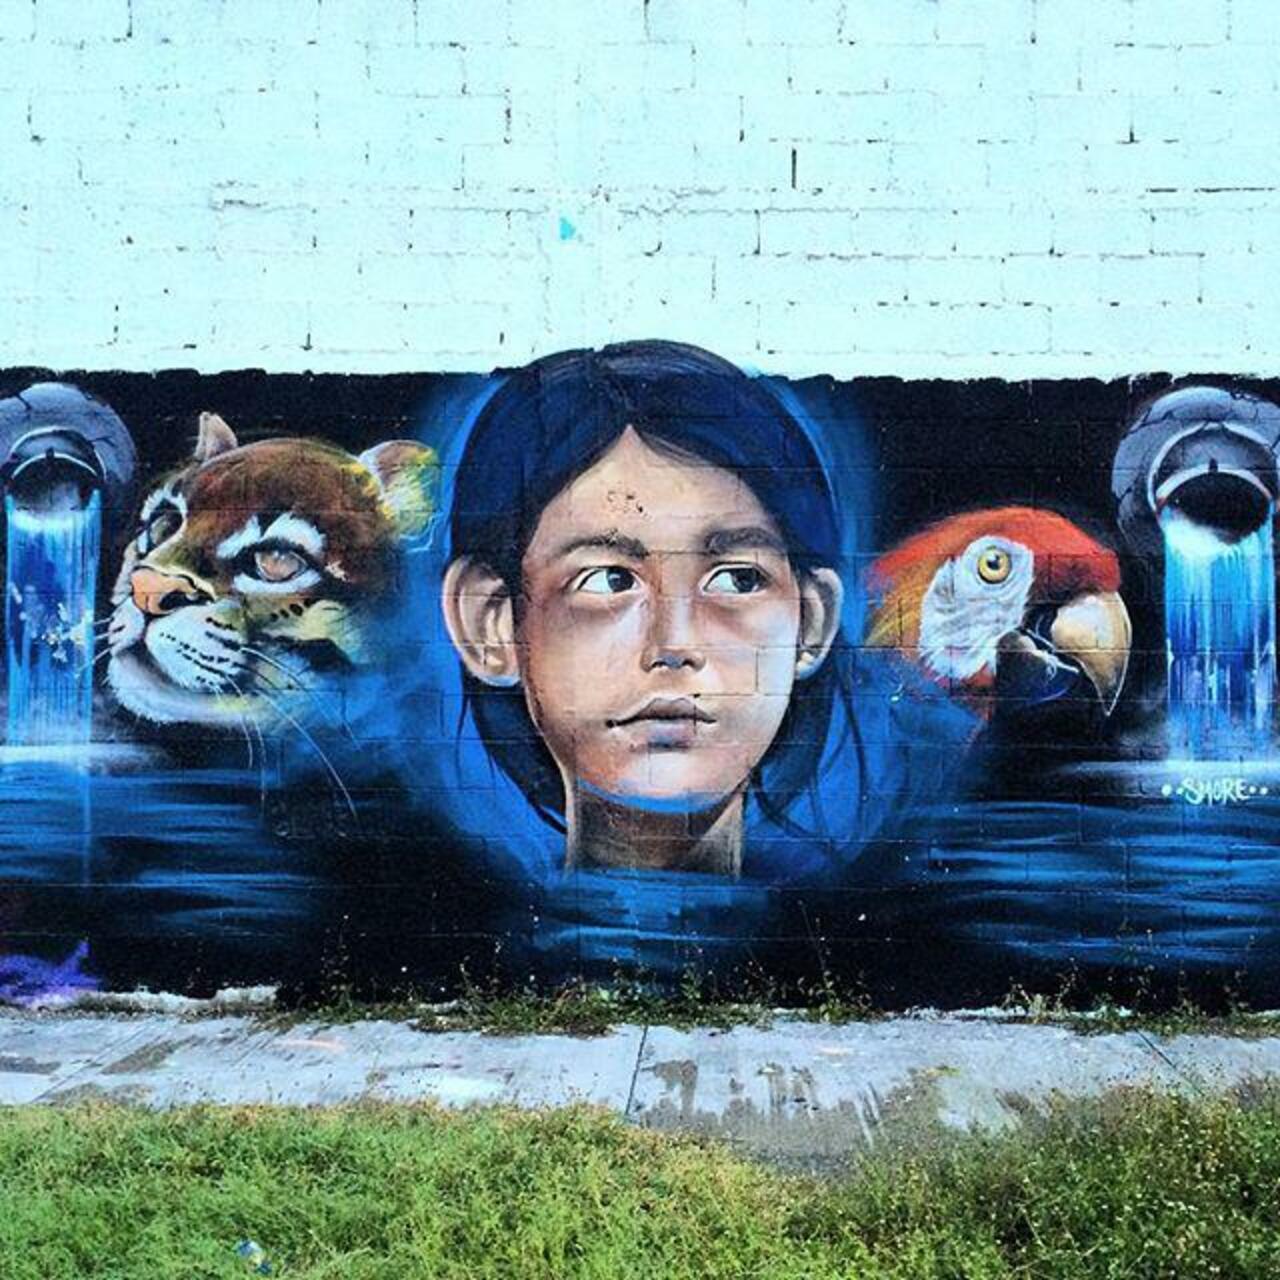 #streetart #arteurbano #urbanart #urban #art #mexico #mural #graffiti #streetartmexico #urbanwalls #wall #streetpho… http://t.co/aYWDCR4s6I